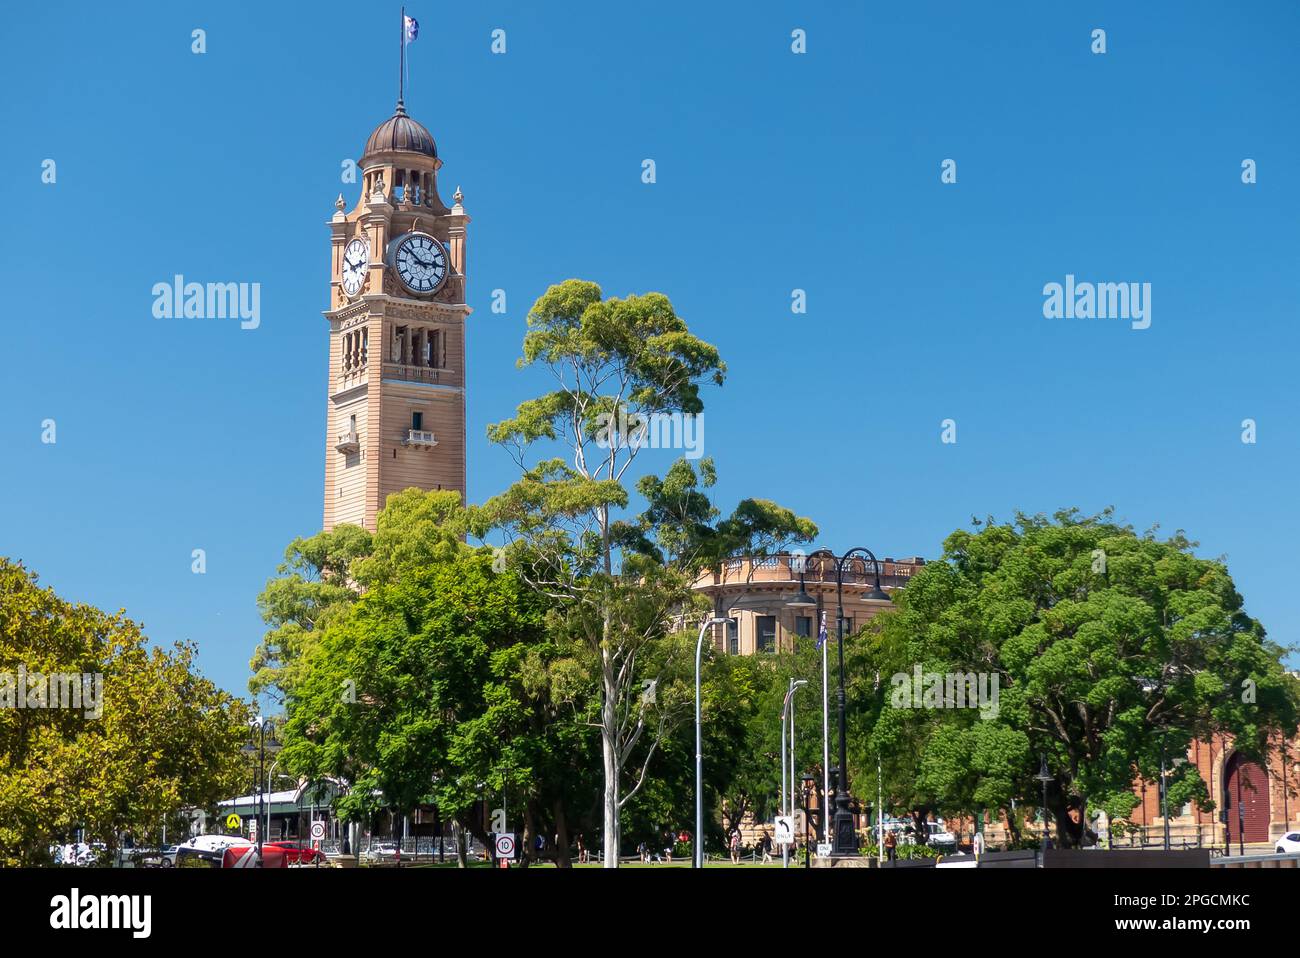 Sydney, Australia: the Central Station clock tower Stock Photo